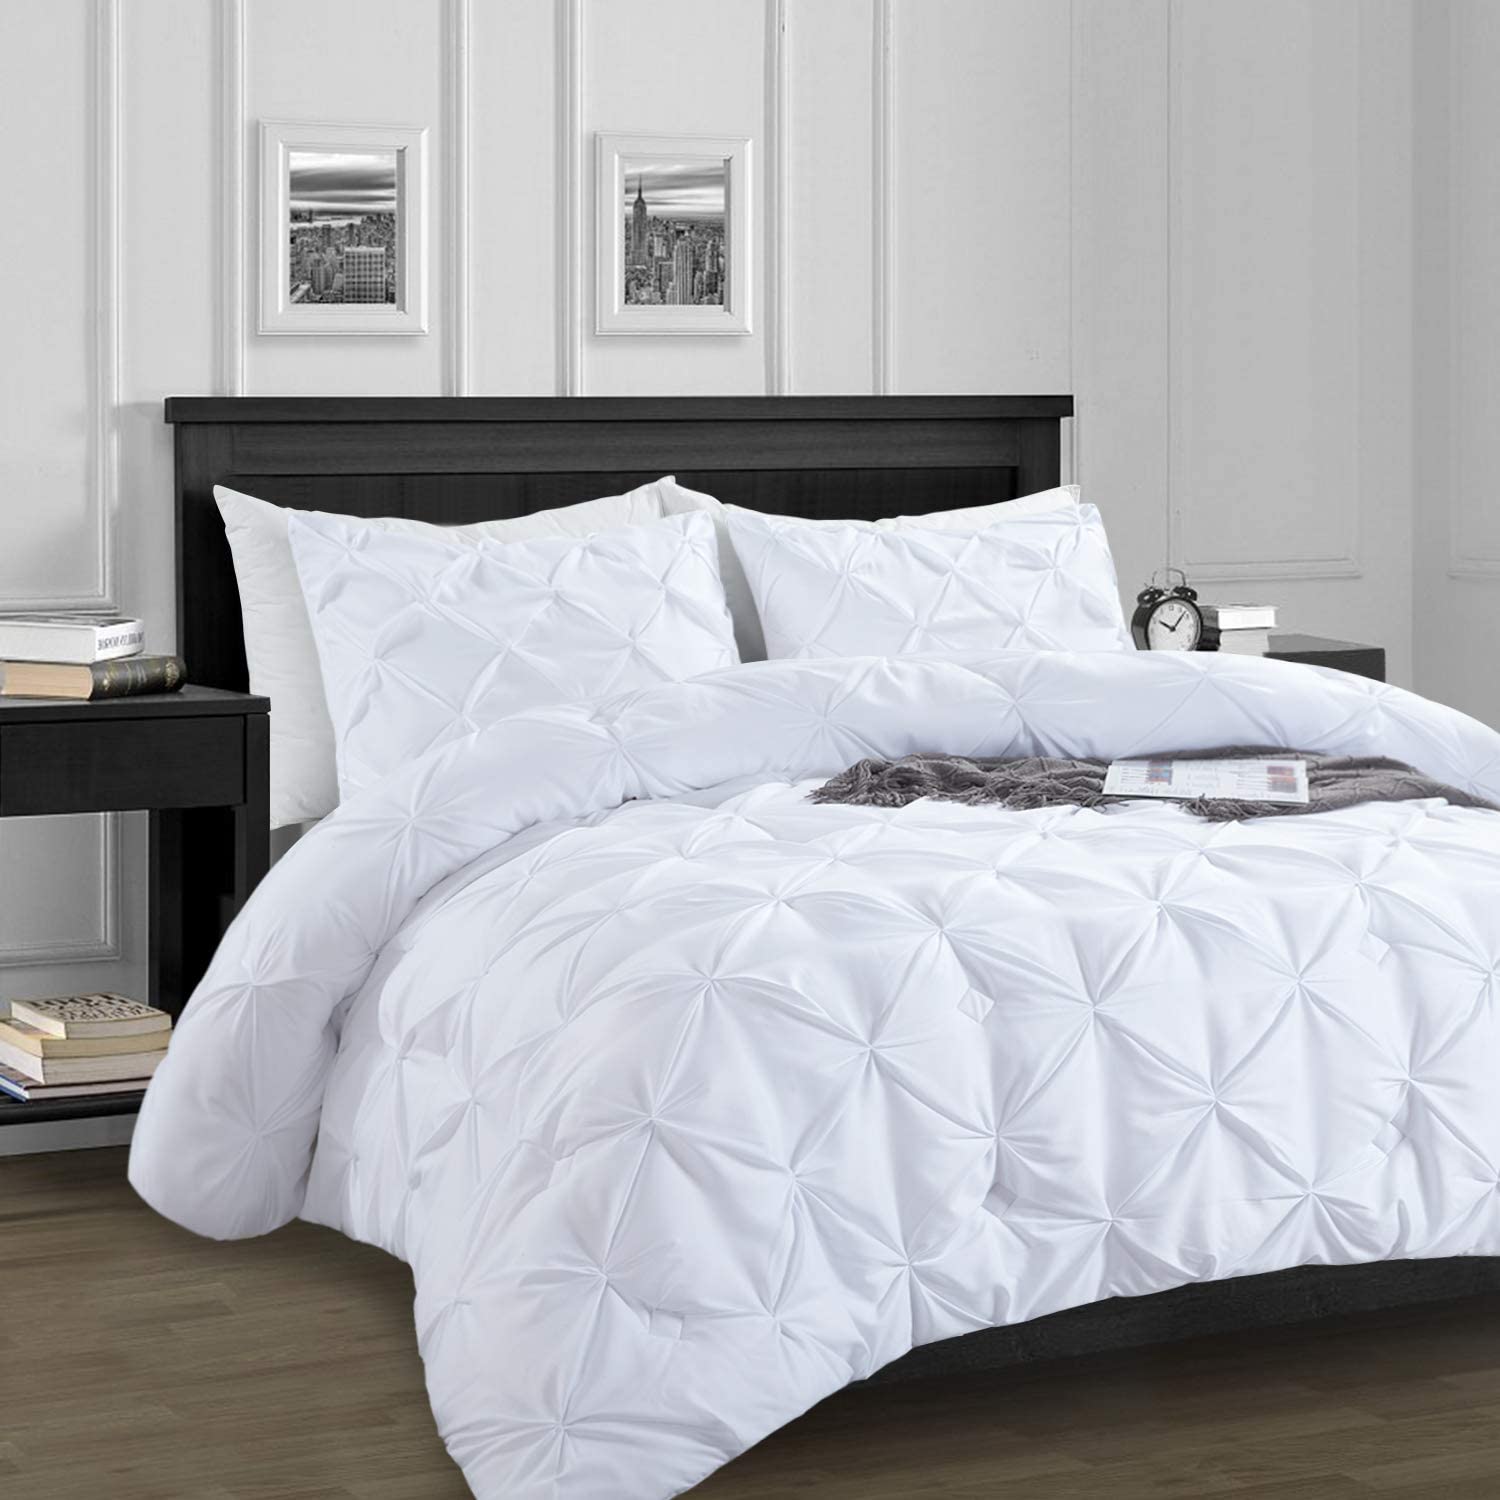 Hombys White Comforter Set Twin Size Lightweight Soft Pinch Pleat Duvet Insert W Ebay